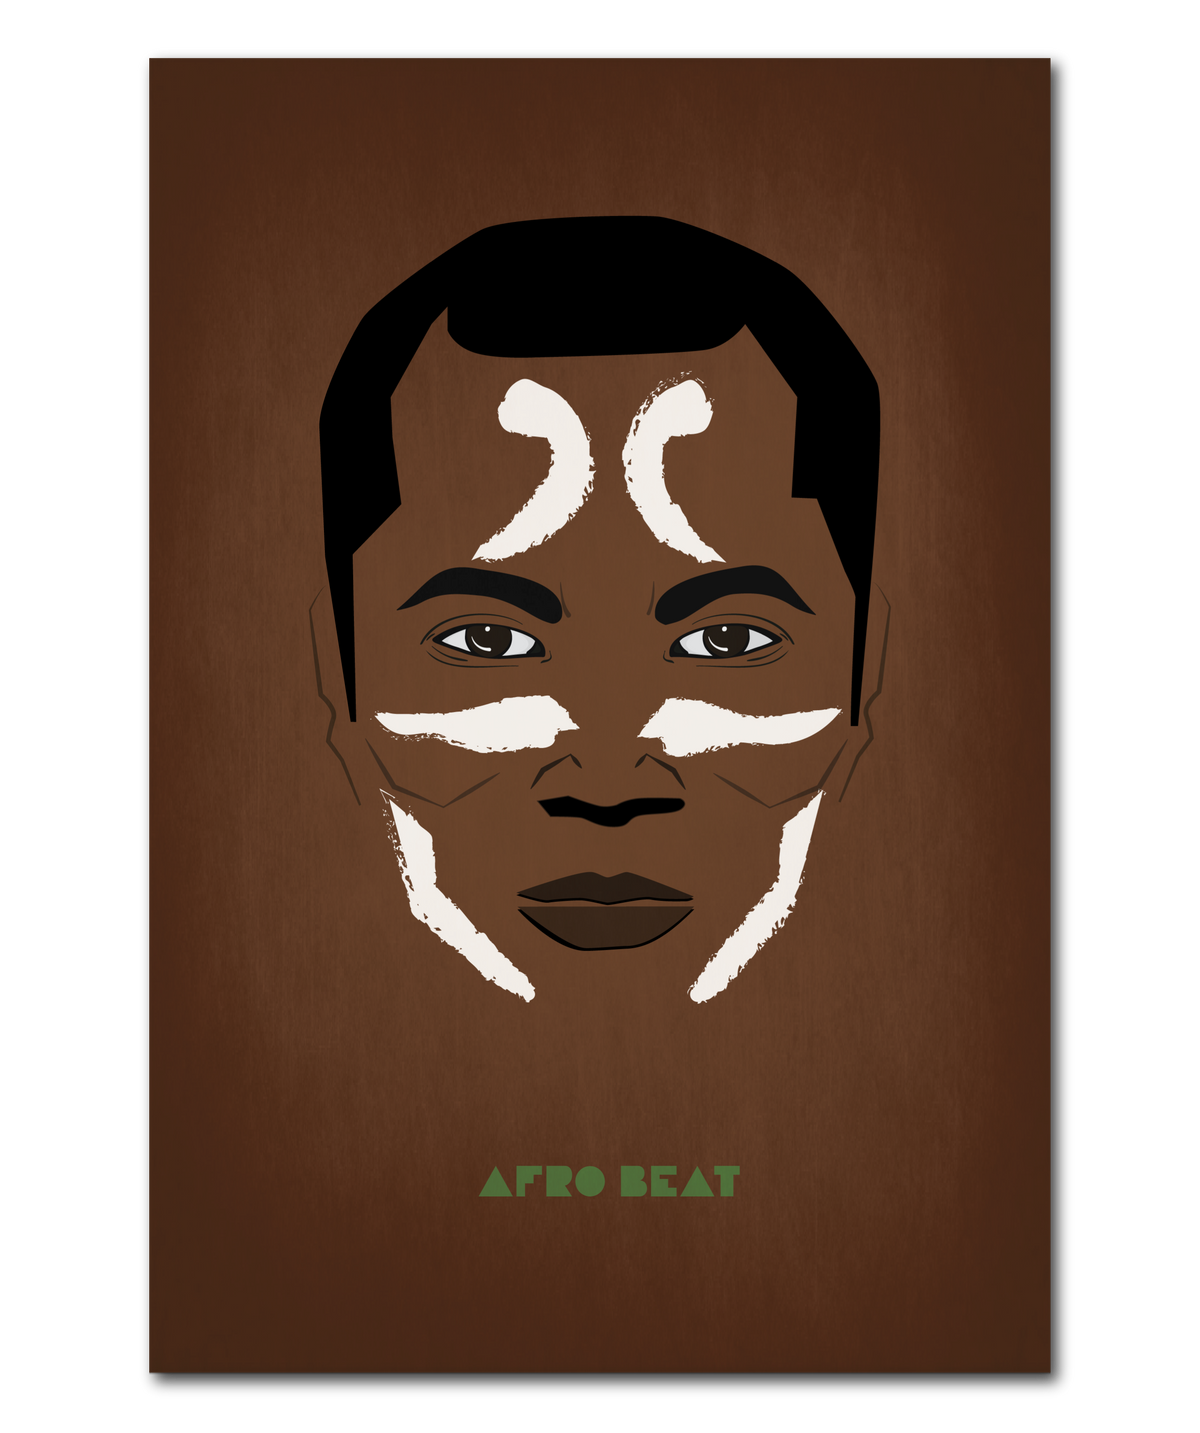 Afro Beat Inspired Original Design Print